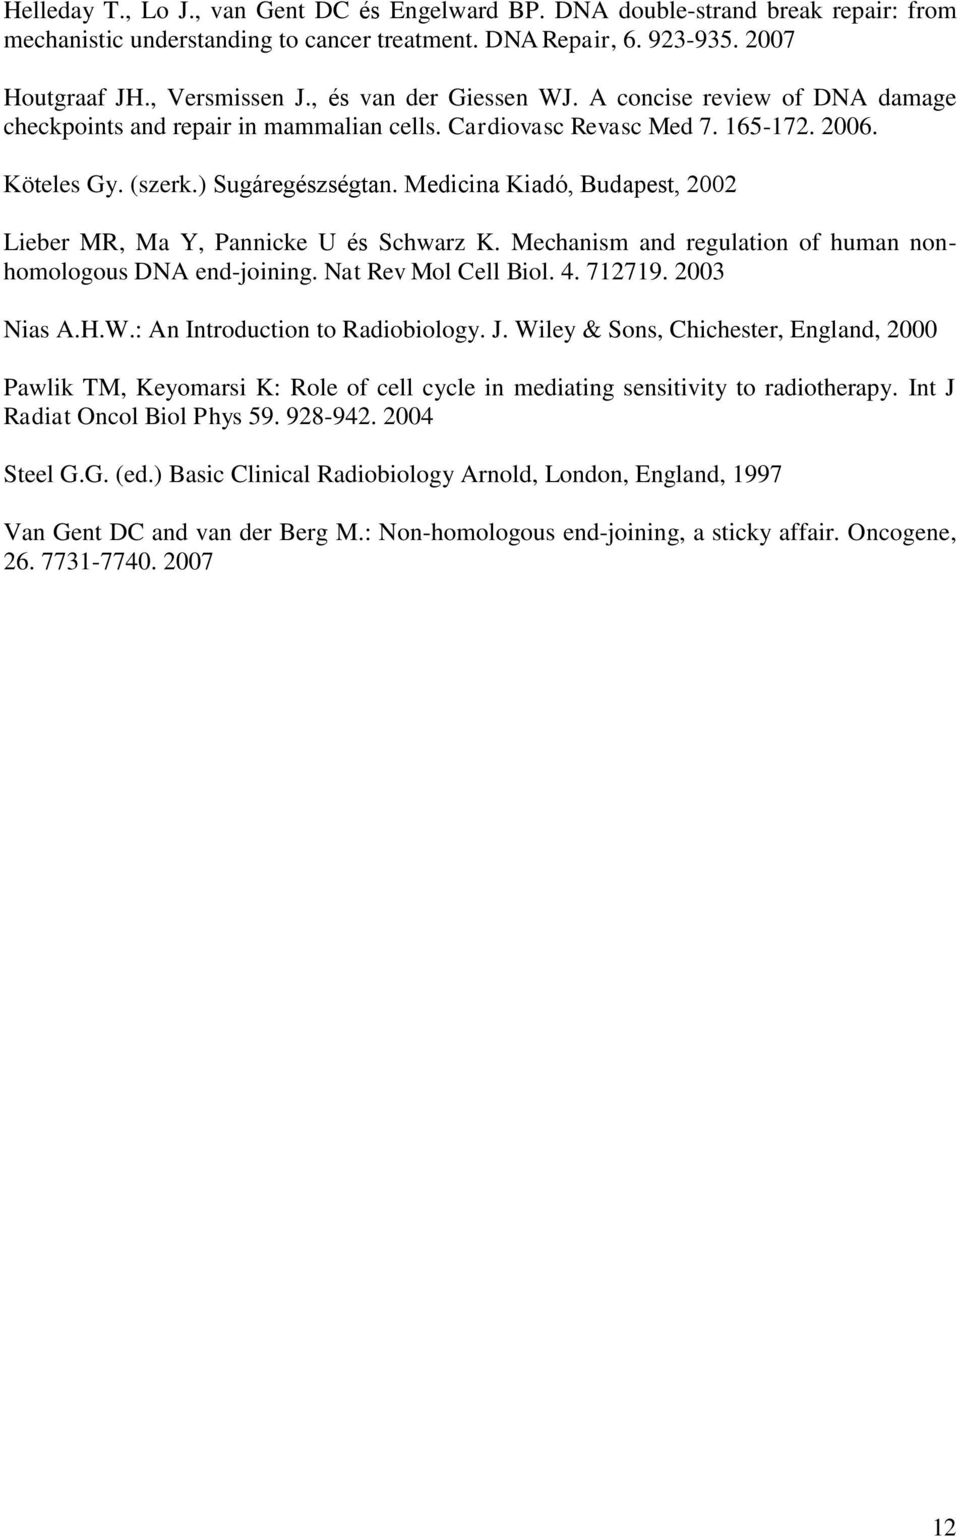 Medicina Kiadó, Budapest, 2002 Lieber MR, Ma Y, Pannicke U és Schwarz K. Mechanism and regulation of human nonhomologous DNA end-joining. Nat Rev Mol Cell Biol. 4. 712719. 2003 Nias A.H.W.